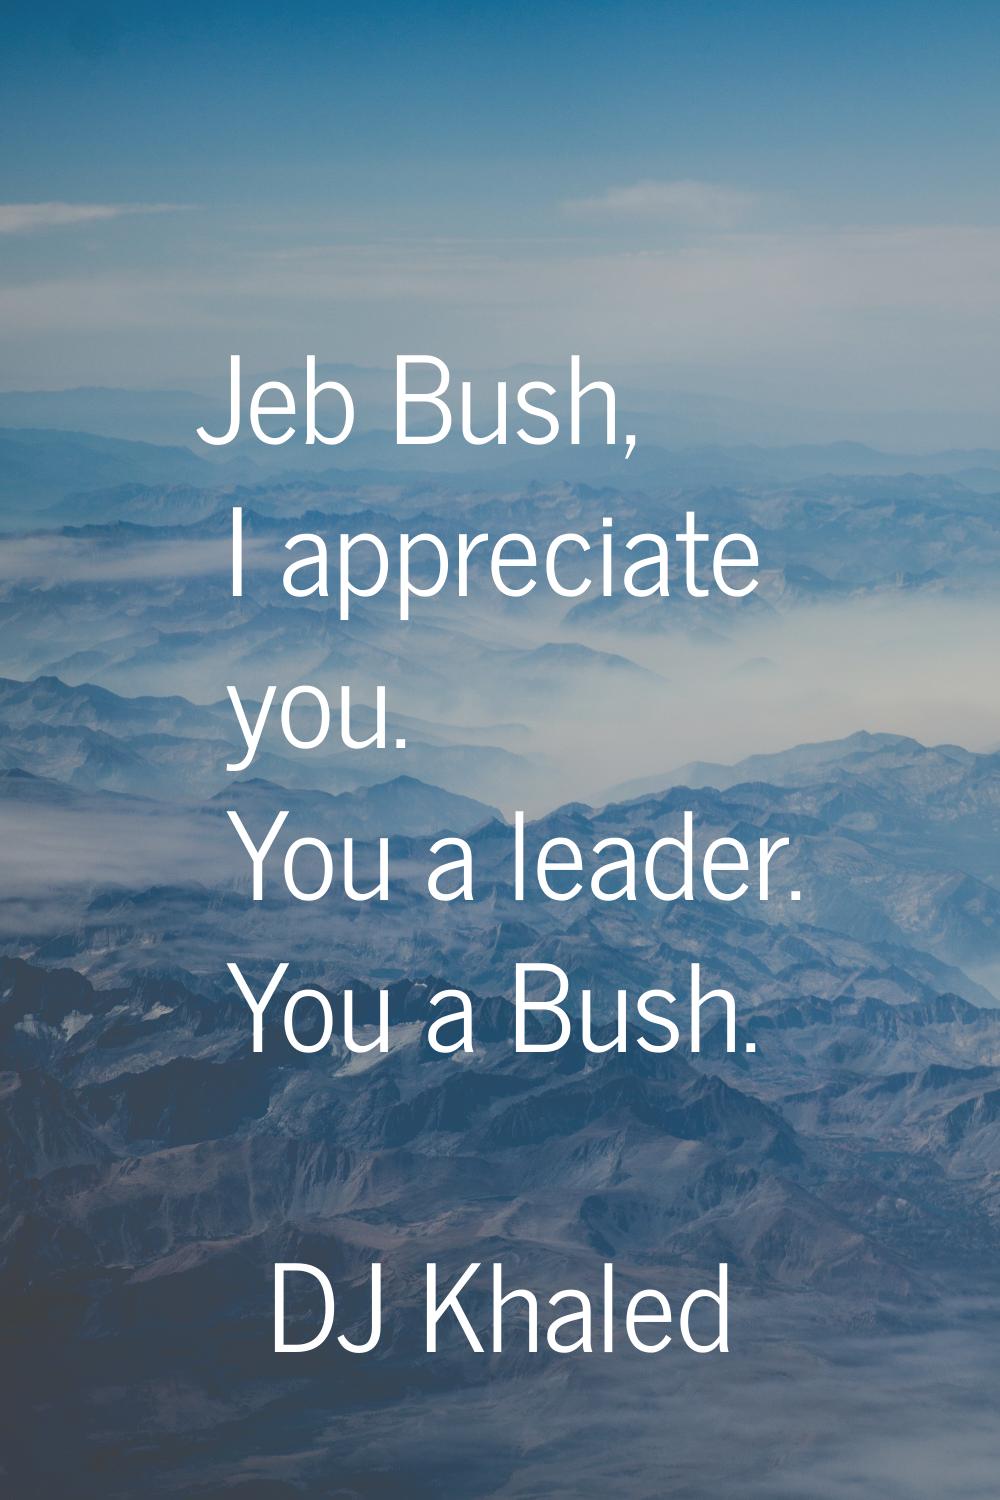 Jeb Bush, I appreciate you. You a leader. You a Bush.